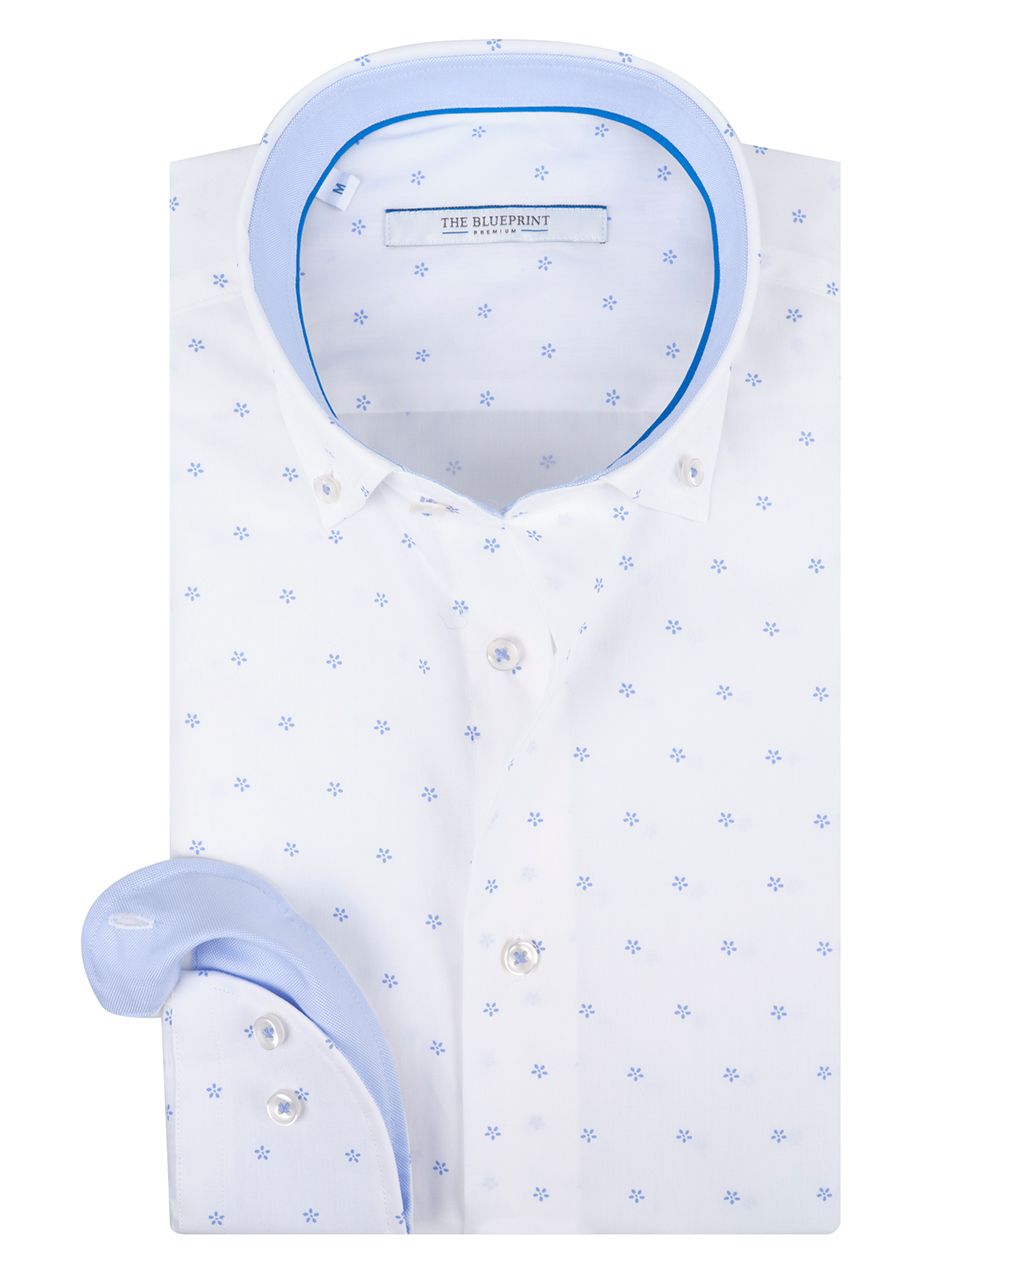 The BLUEPRINT Premium Trendy Overhemd LM Wit dessin 078408-001-L